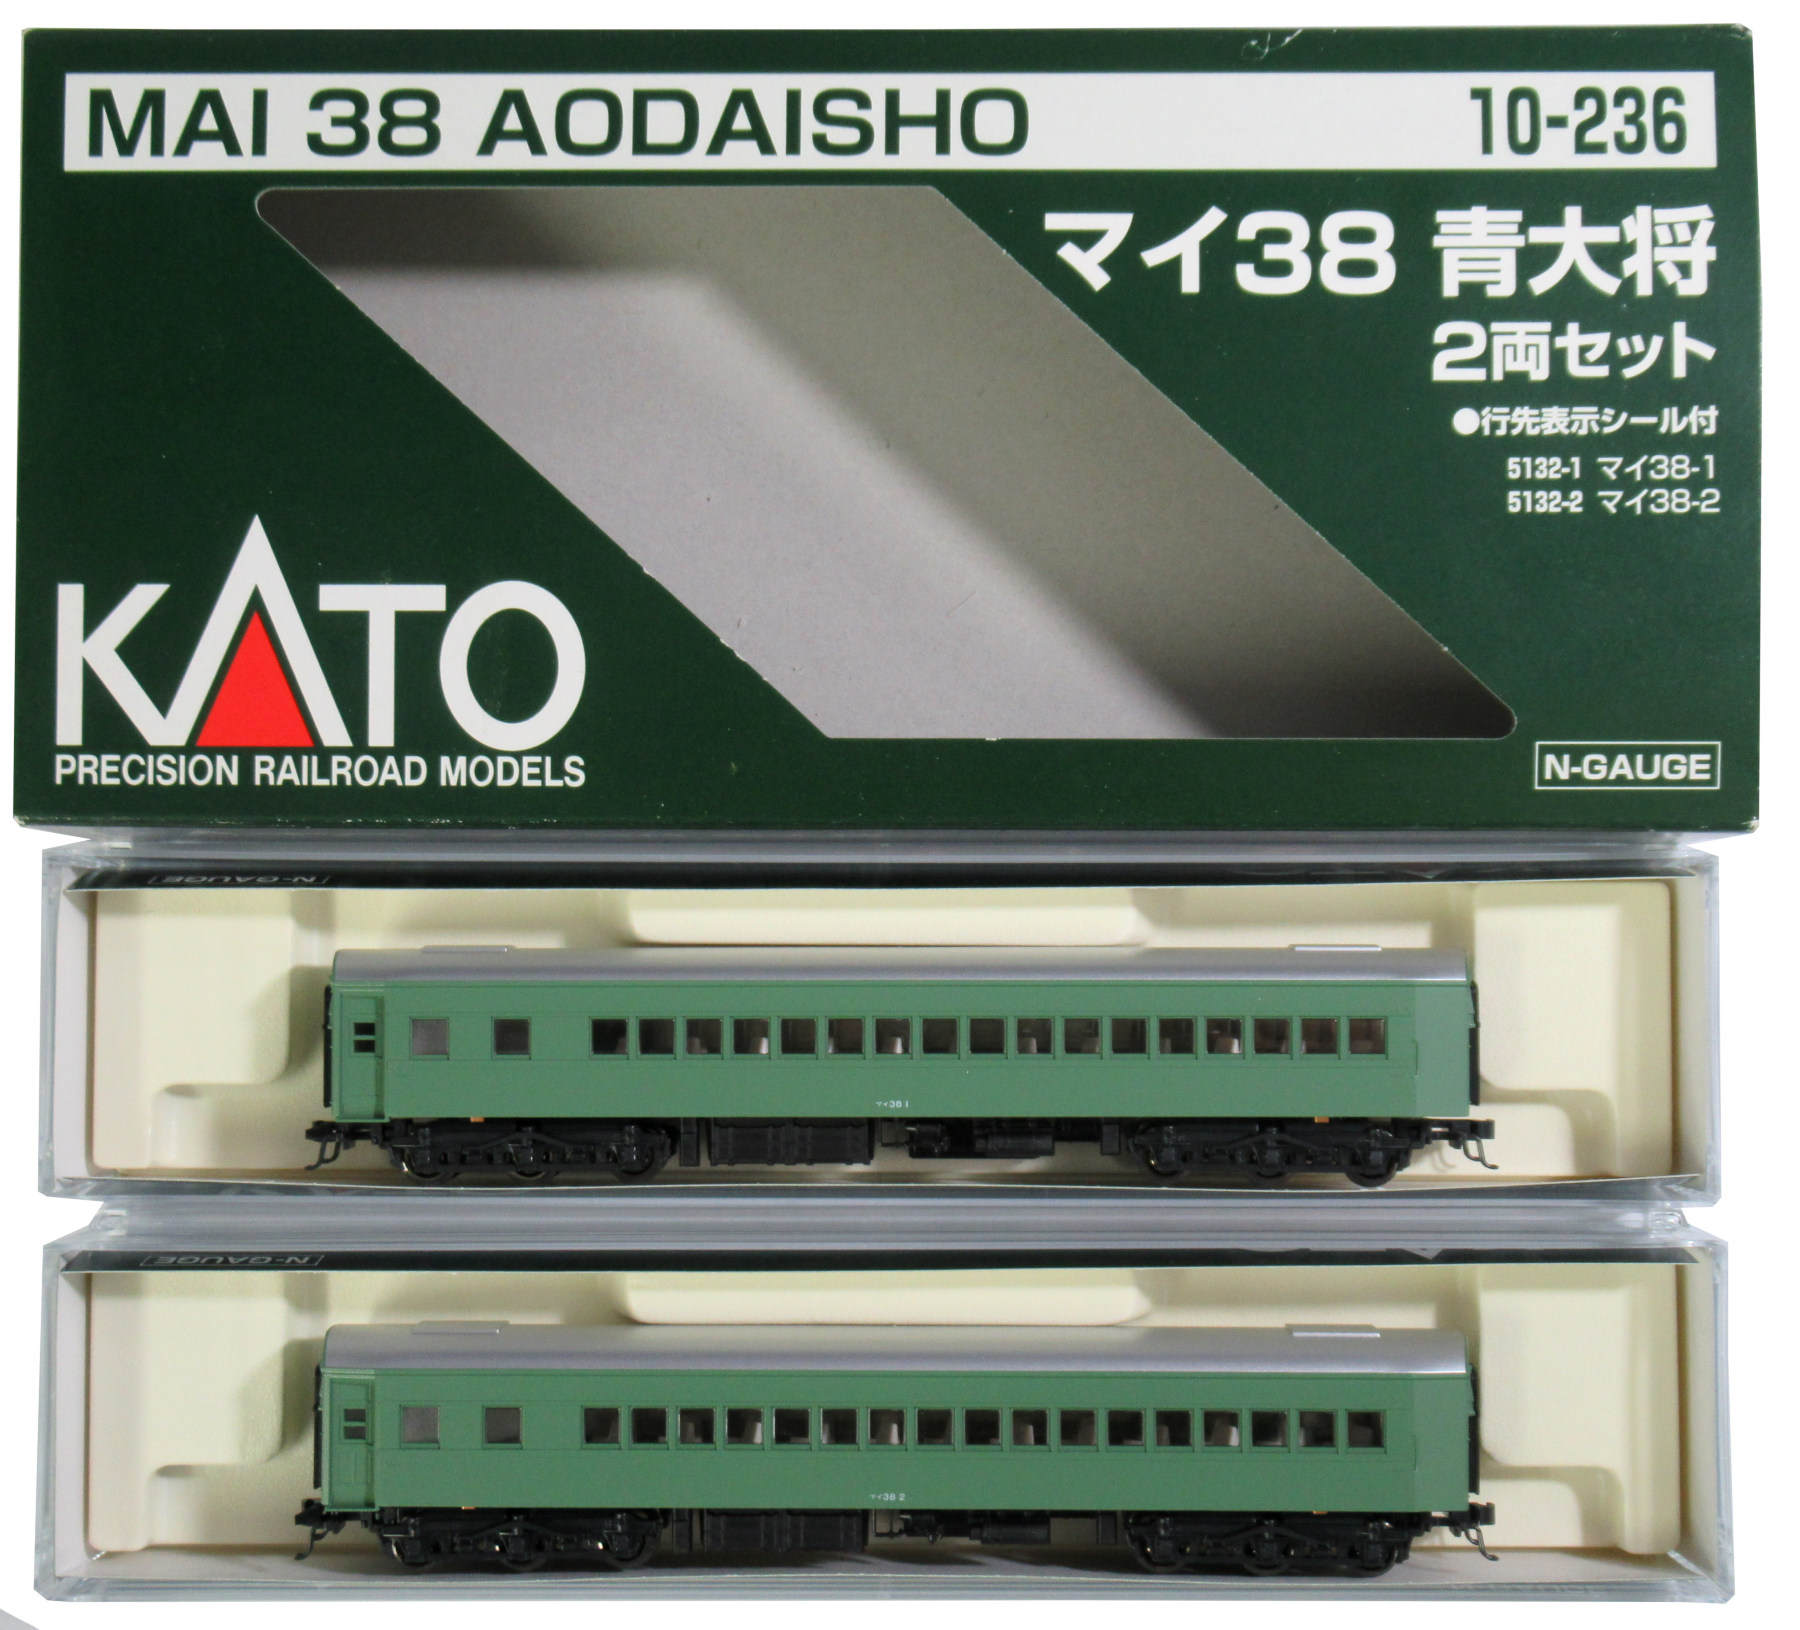 KATO マイ38 青大将 2両セット 10-236 - 鉄道模型